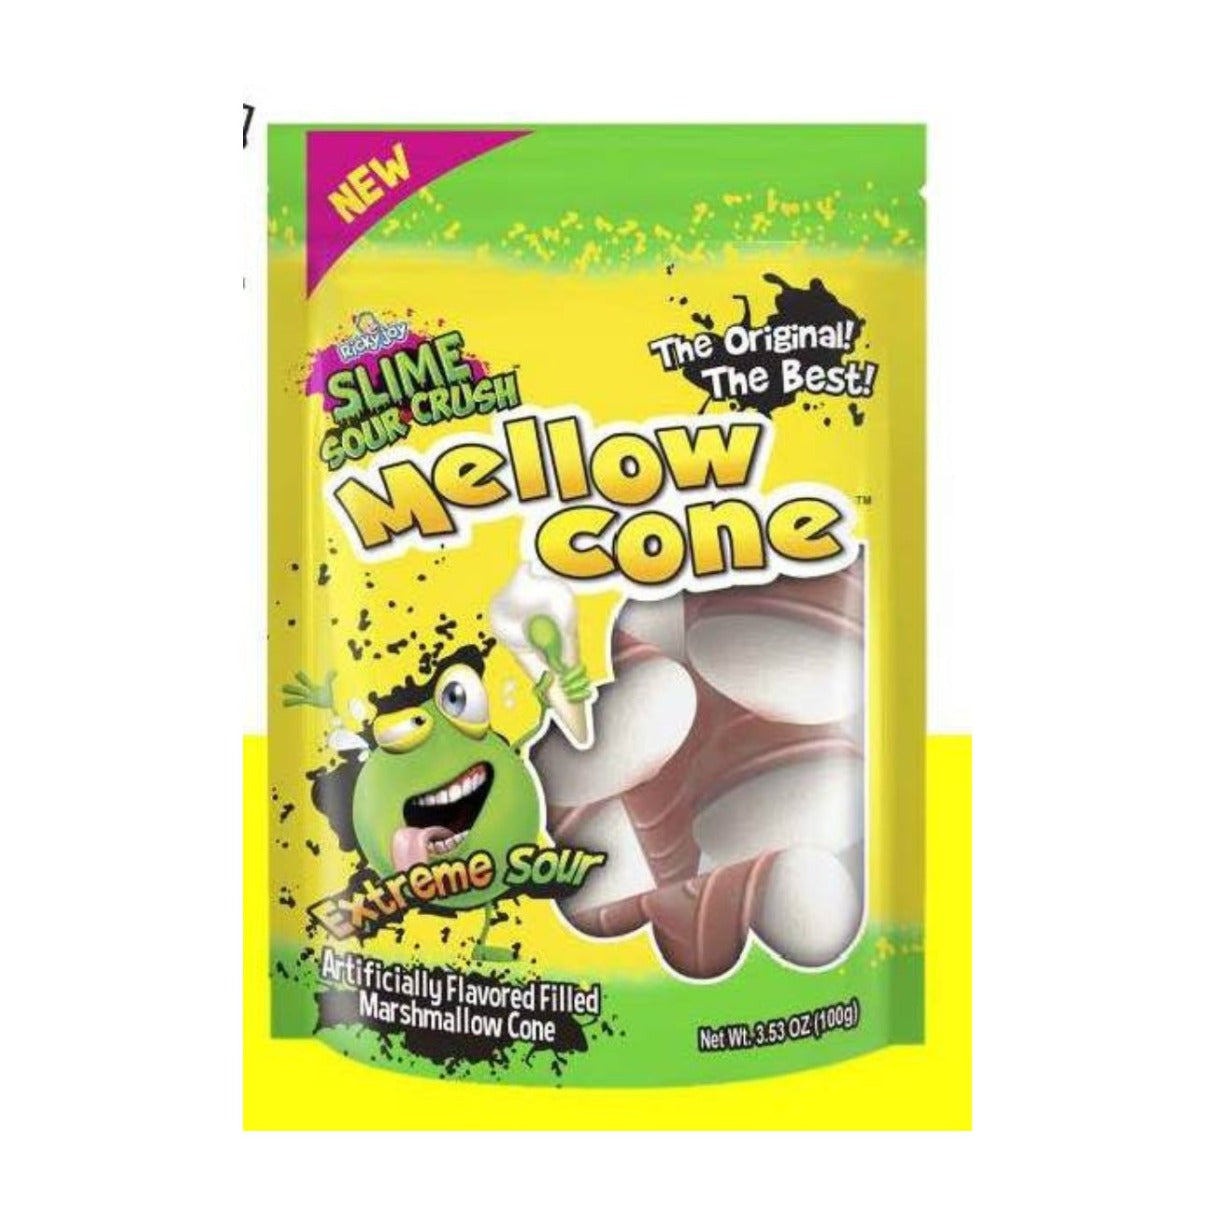 Ricky Joy Mellow Cones Extreme Slime Sour Crush 3.53oz - 18ct